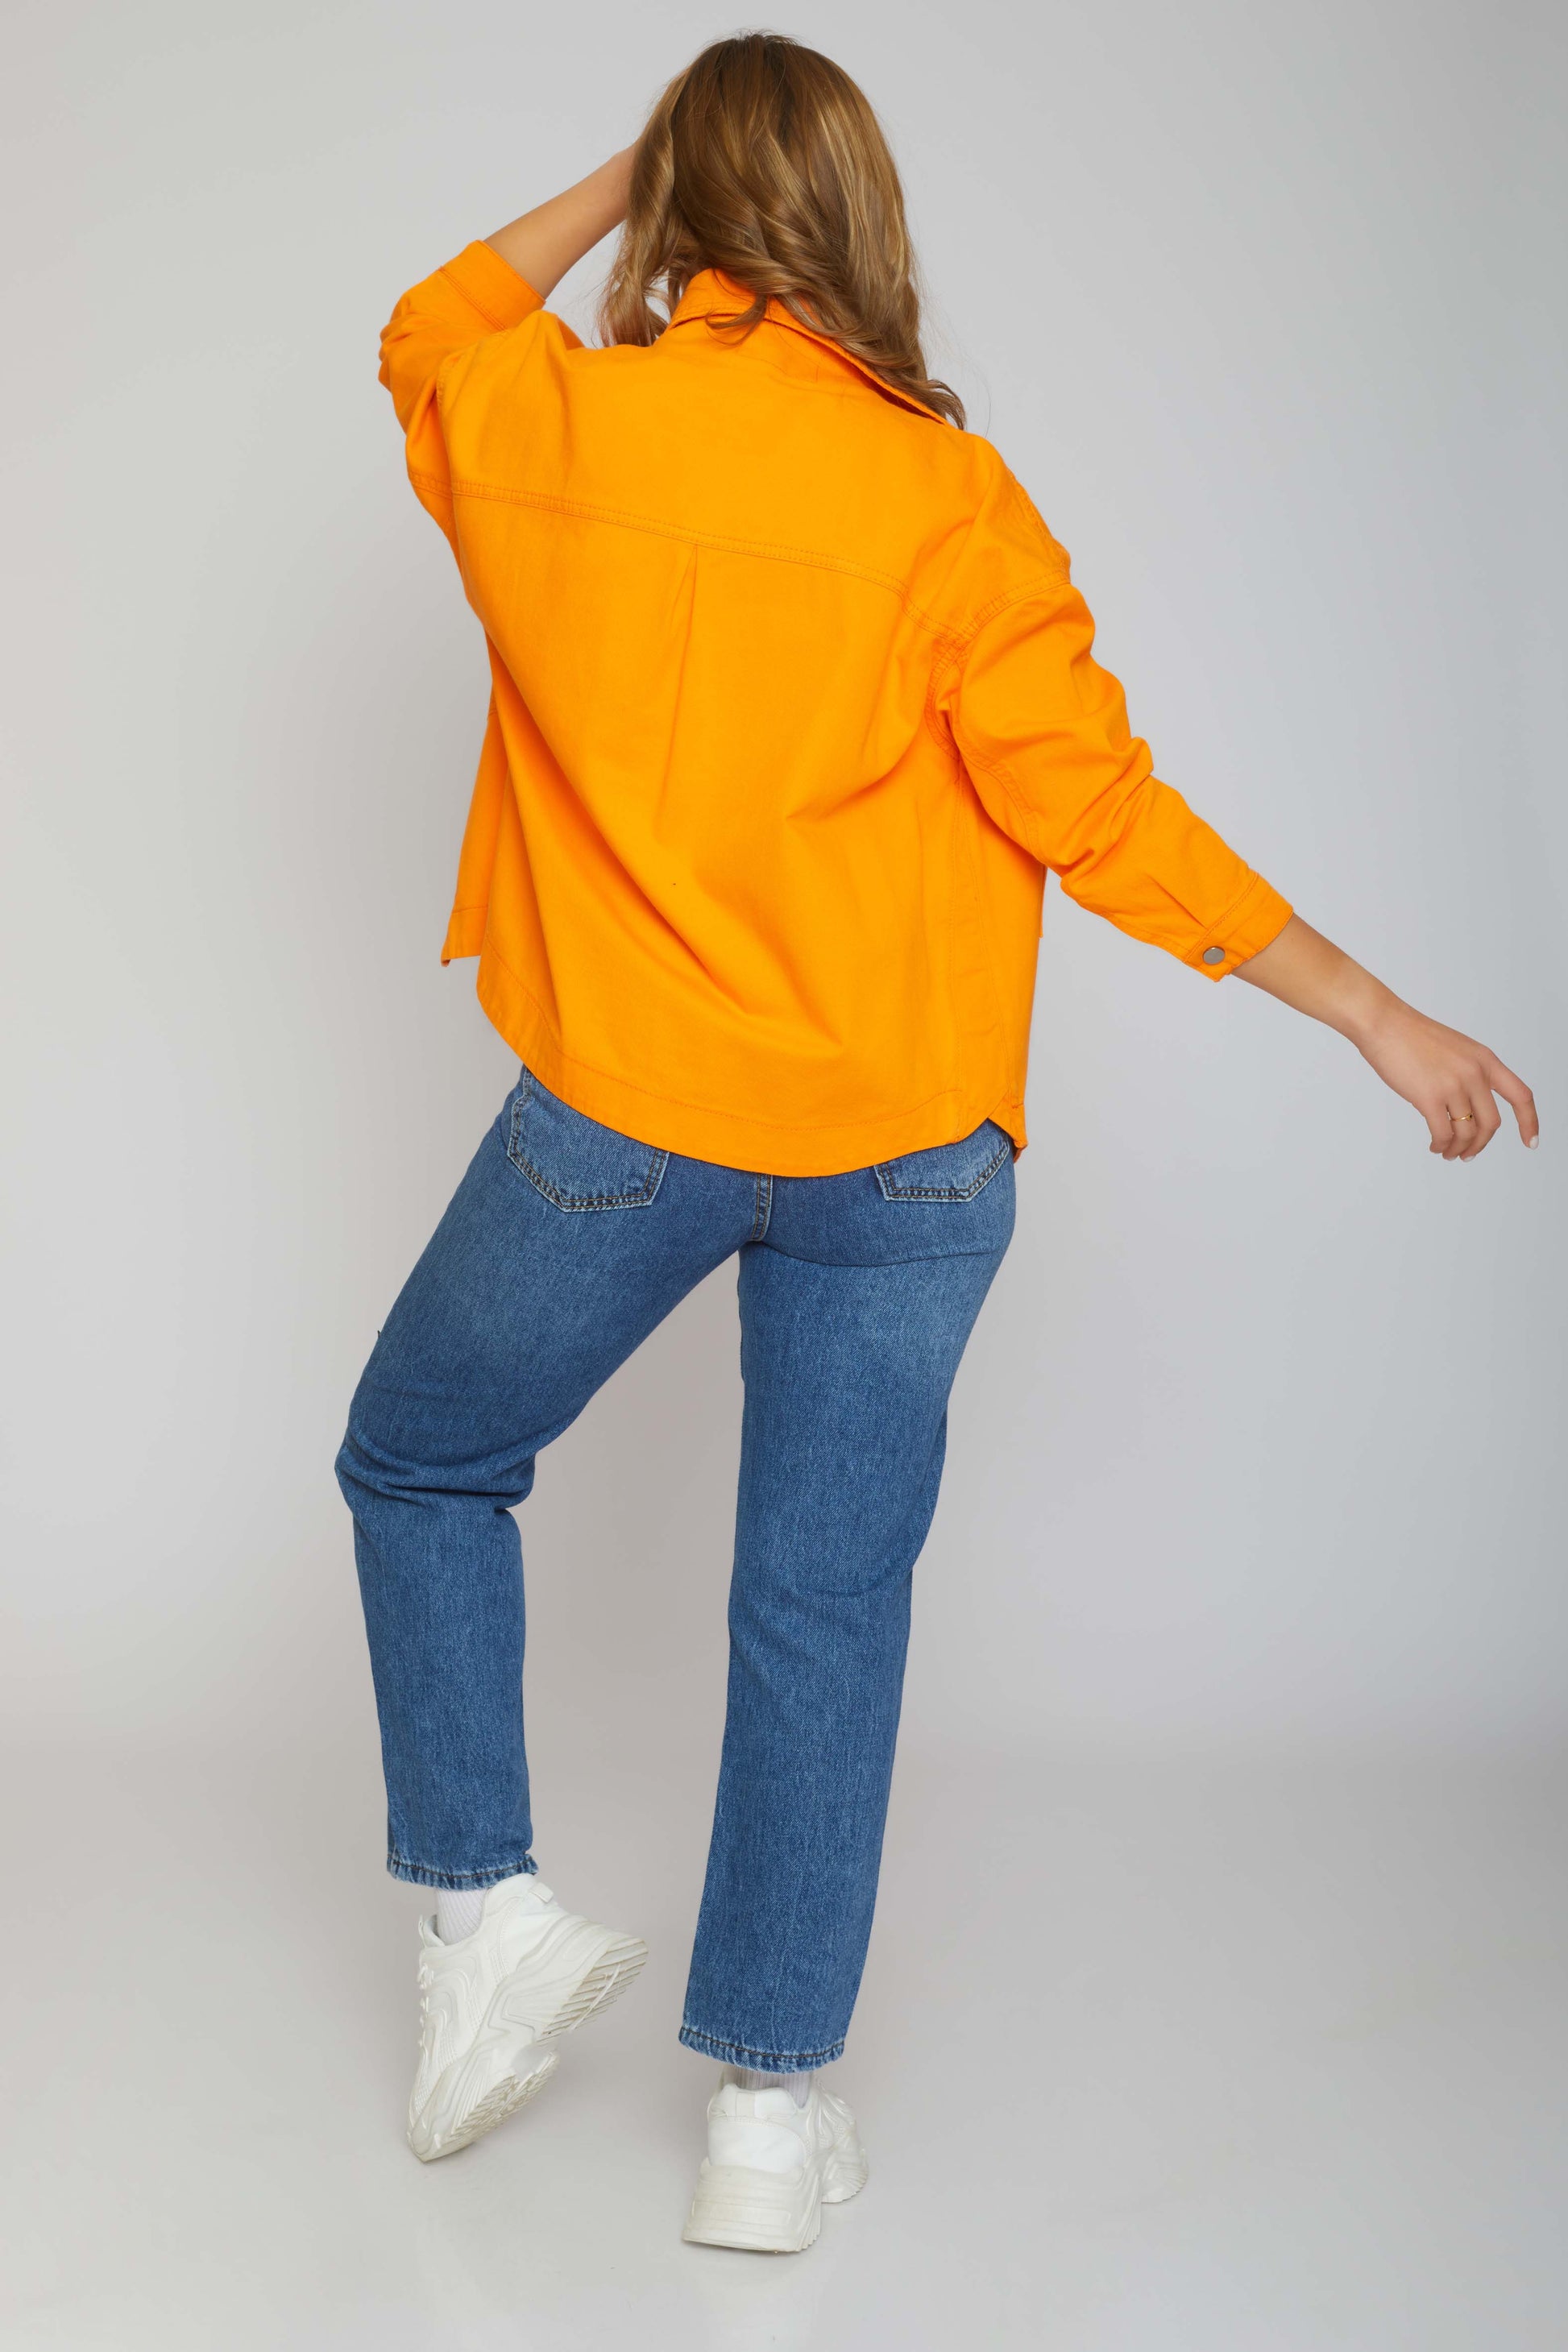 dj jacket gabardine - with 2 pockets - Orange